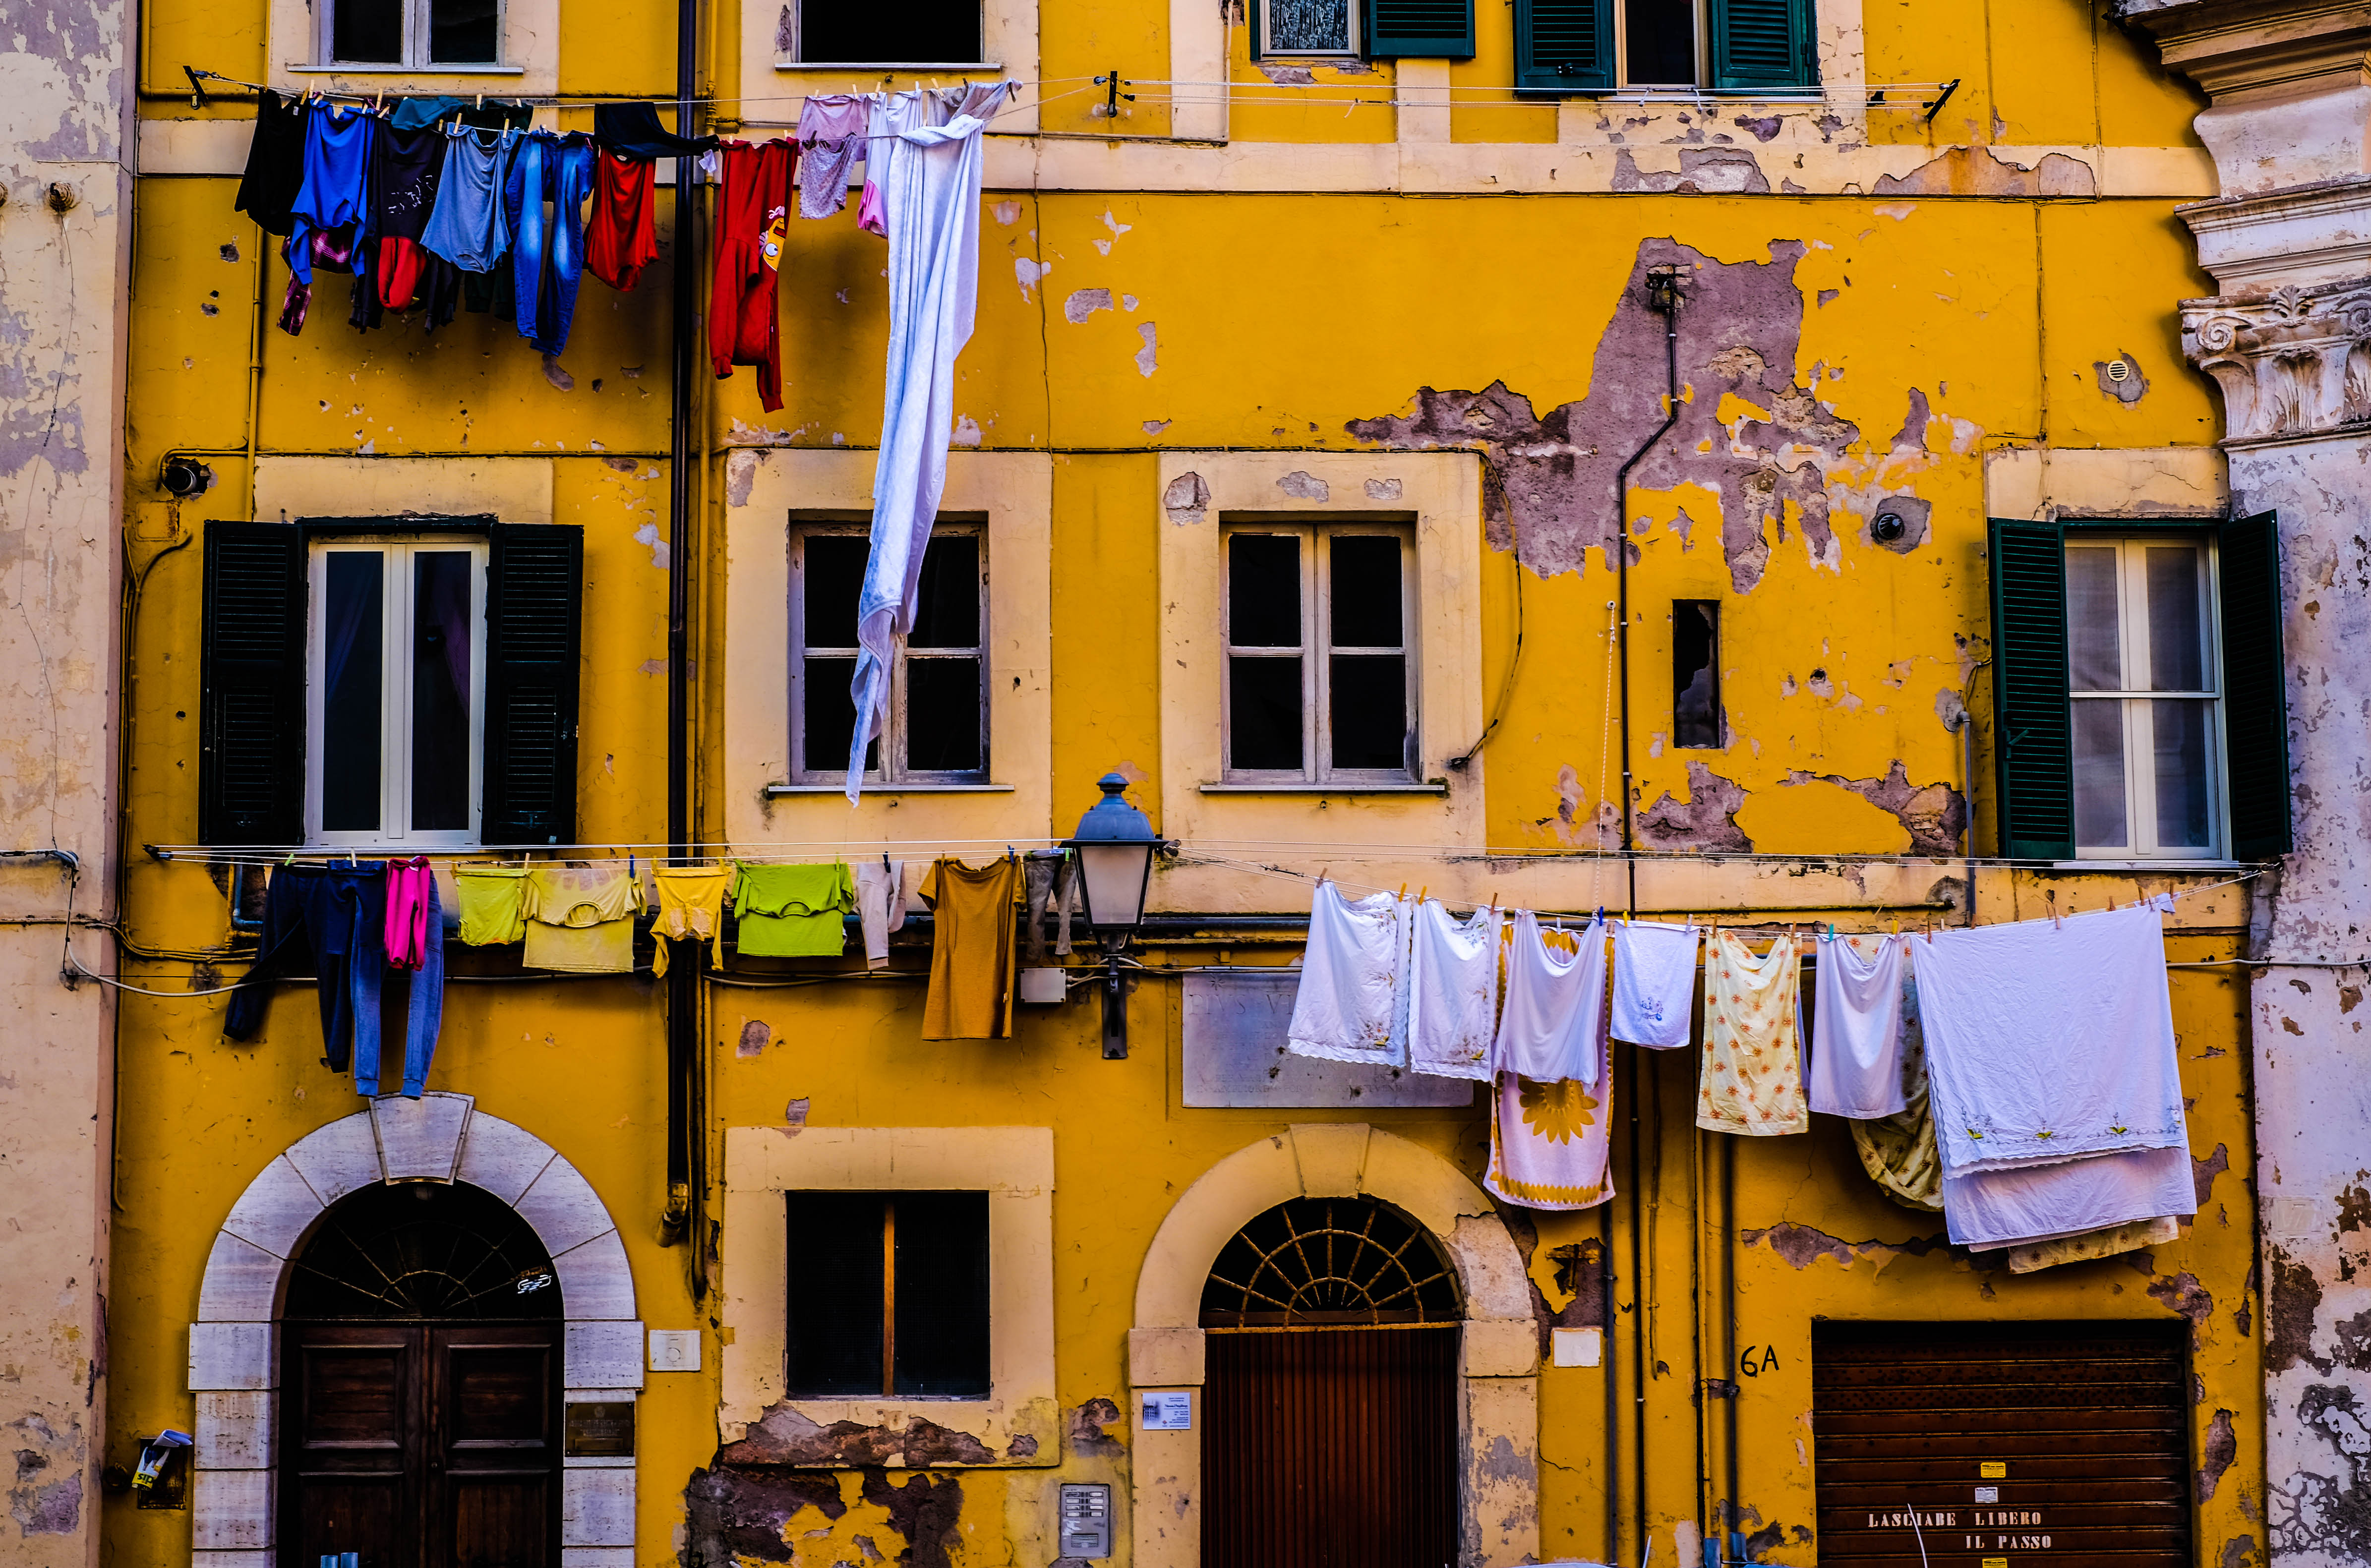 A historic building, hanging clothes and falling plaster: Piazza Leandra according to Marco Quartieri #postcardsfromcivitavecchia